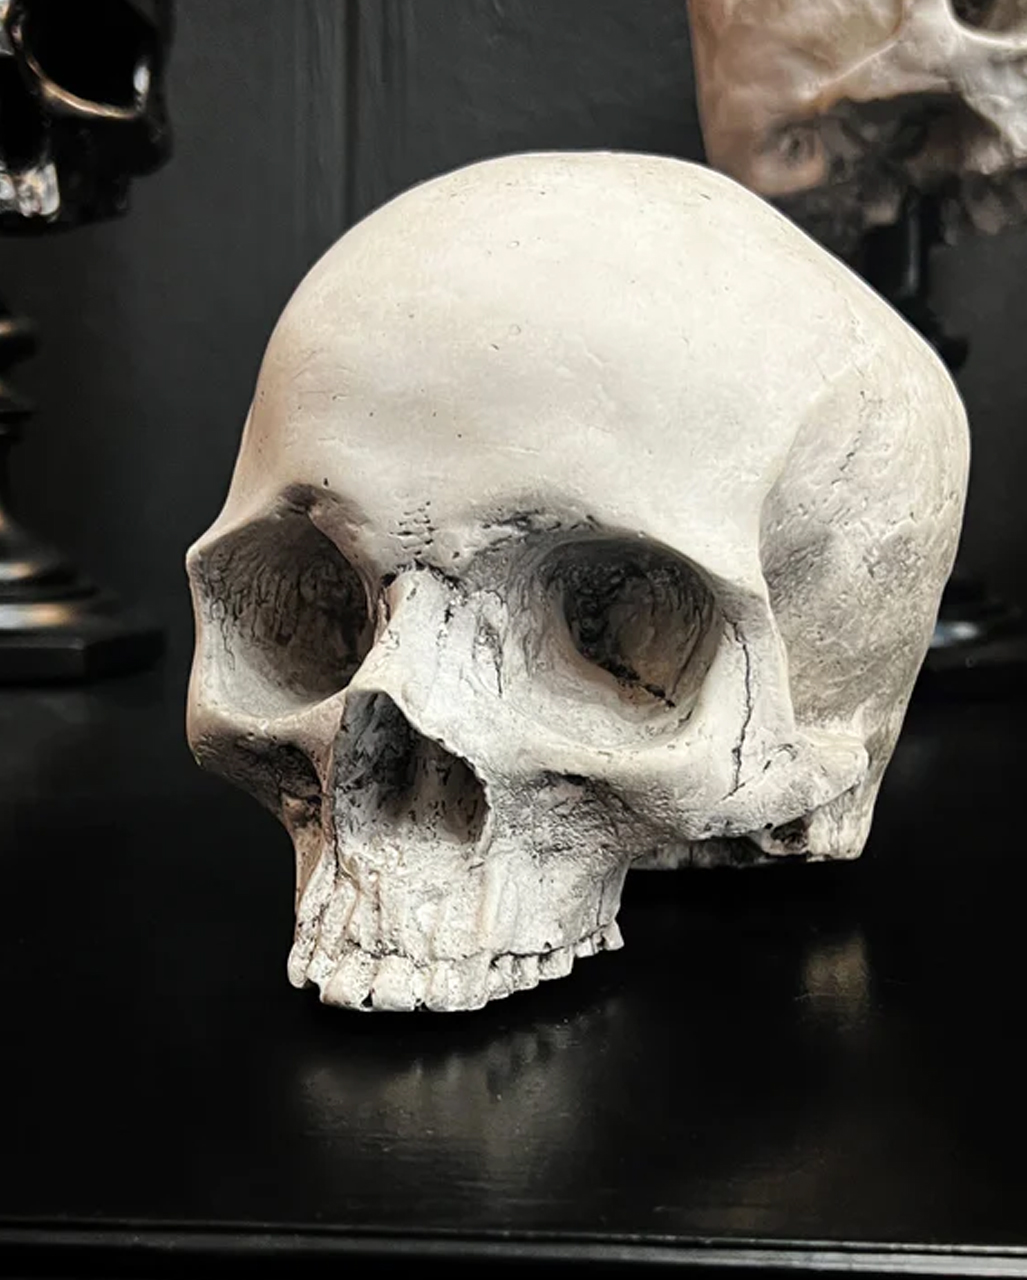 Totenkopf Deko für Halloween Partys geeignet Pirat Gothic Skull  Totenschädel Piratenlook Schädel Partydekoration